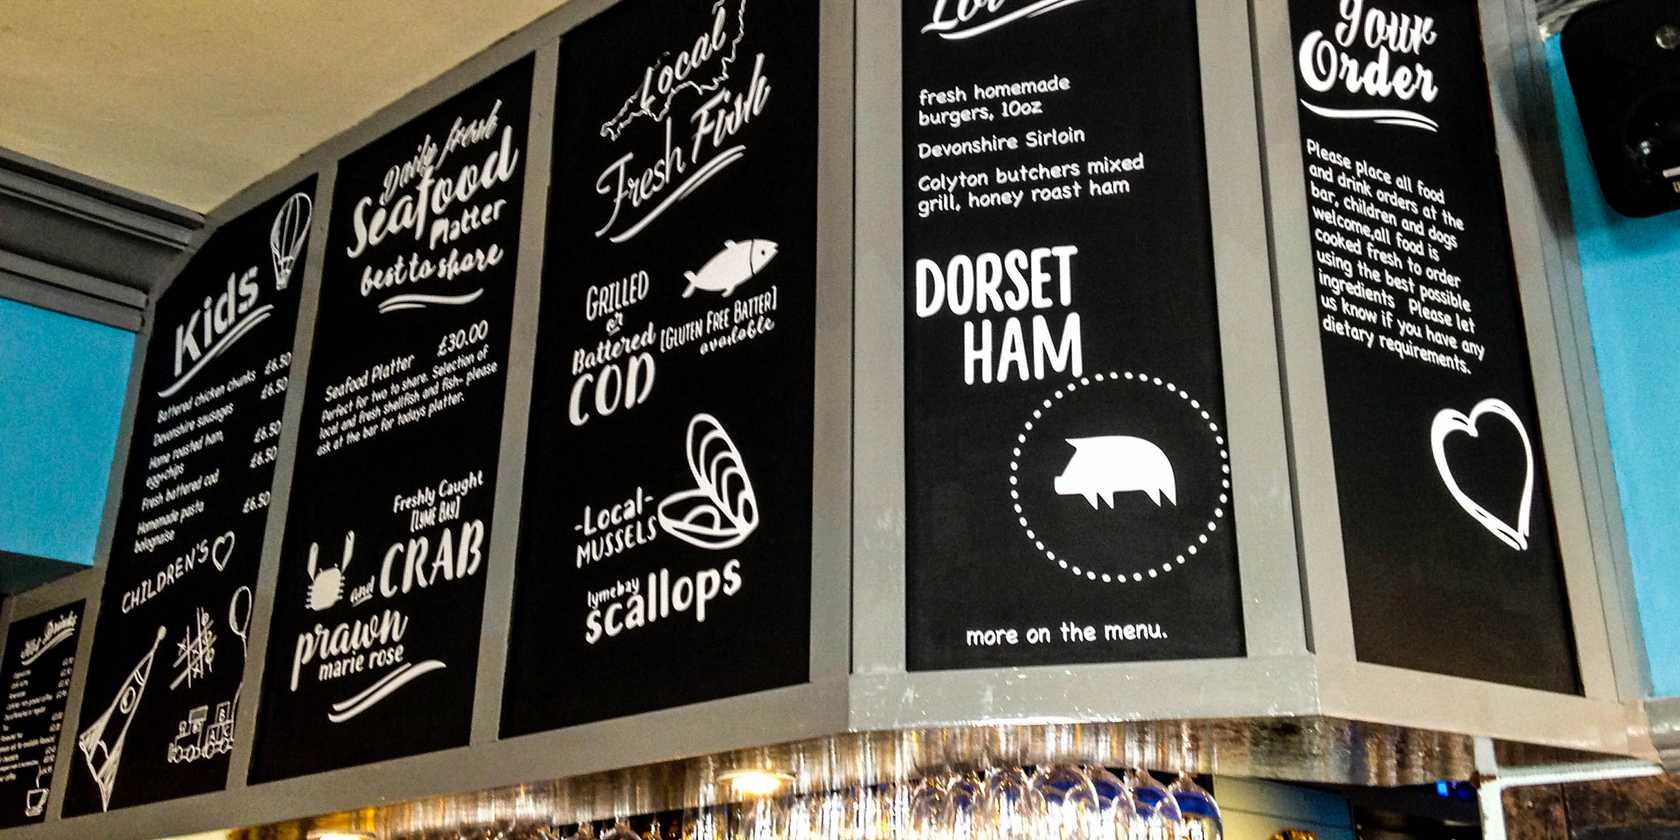 Custom printed blackboard for the Cobb Arms Pub in Dorset